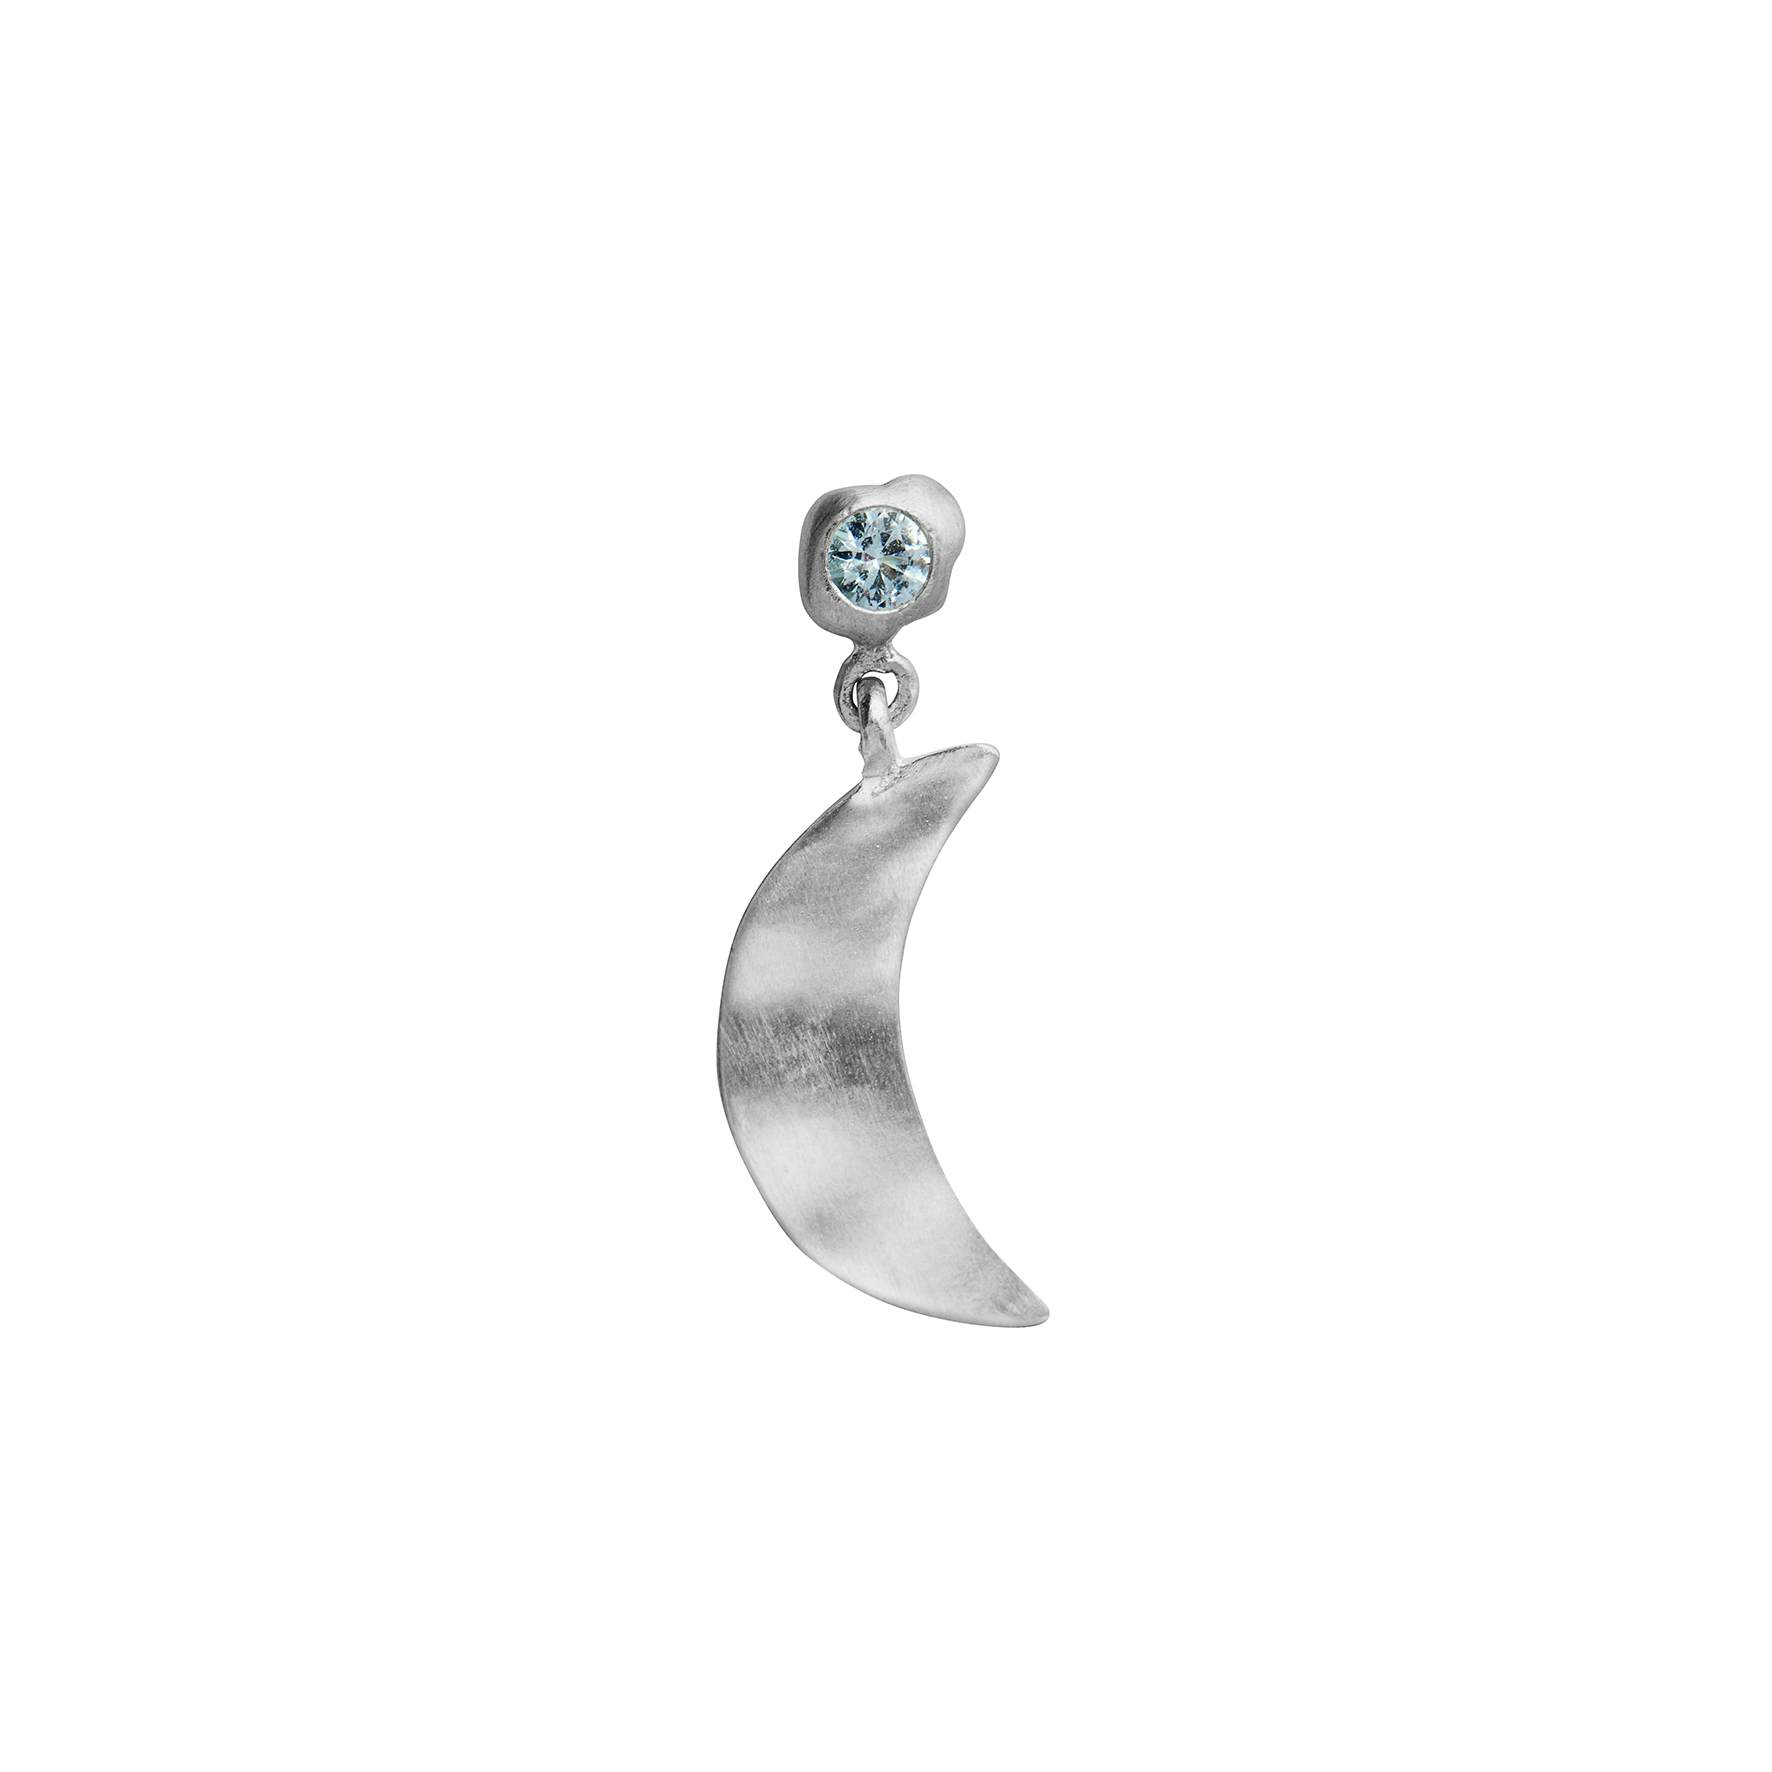 Big Dot Bella Moon with Blue Lagune Stone från STINE A Jewelry i Silver Sterling 925